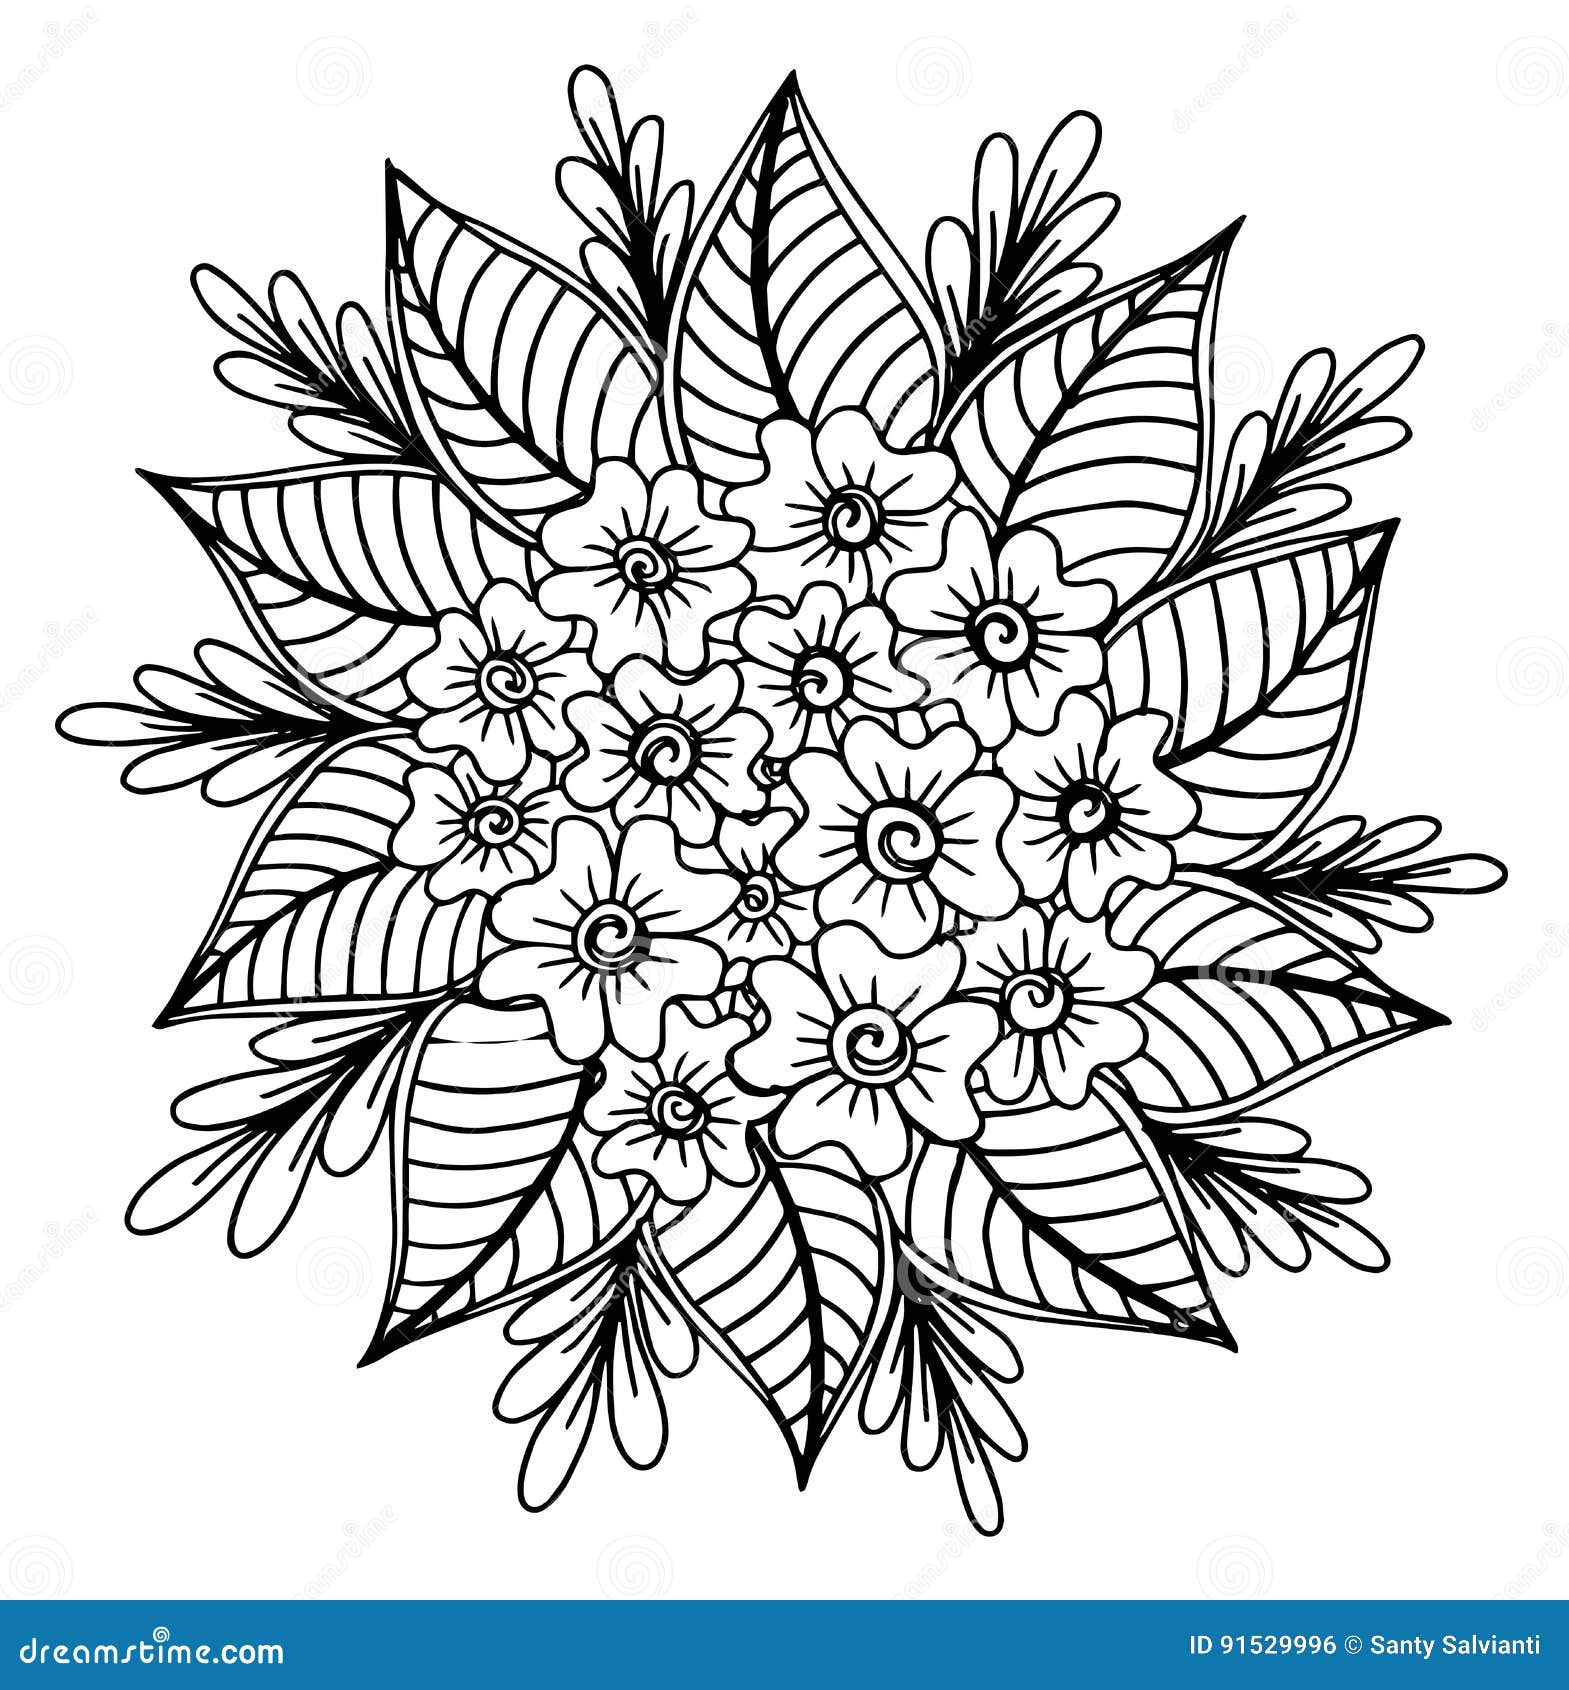 Hand Drawn of Flowers Illustration Stock Vector - Illustration of ...